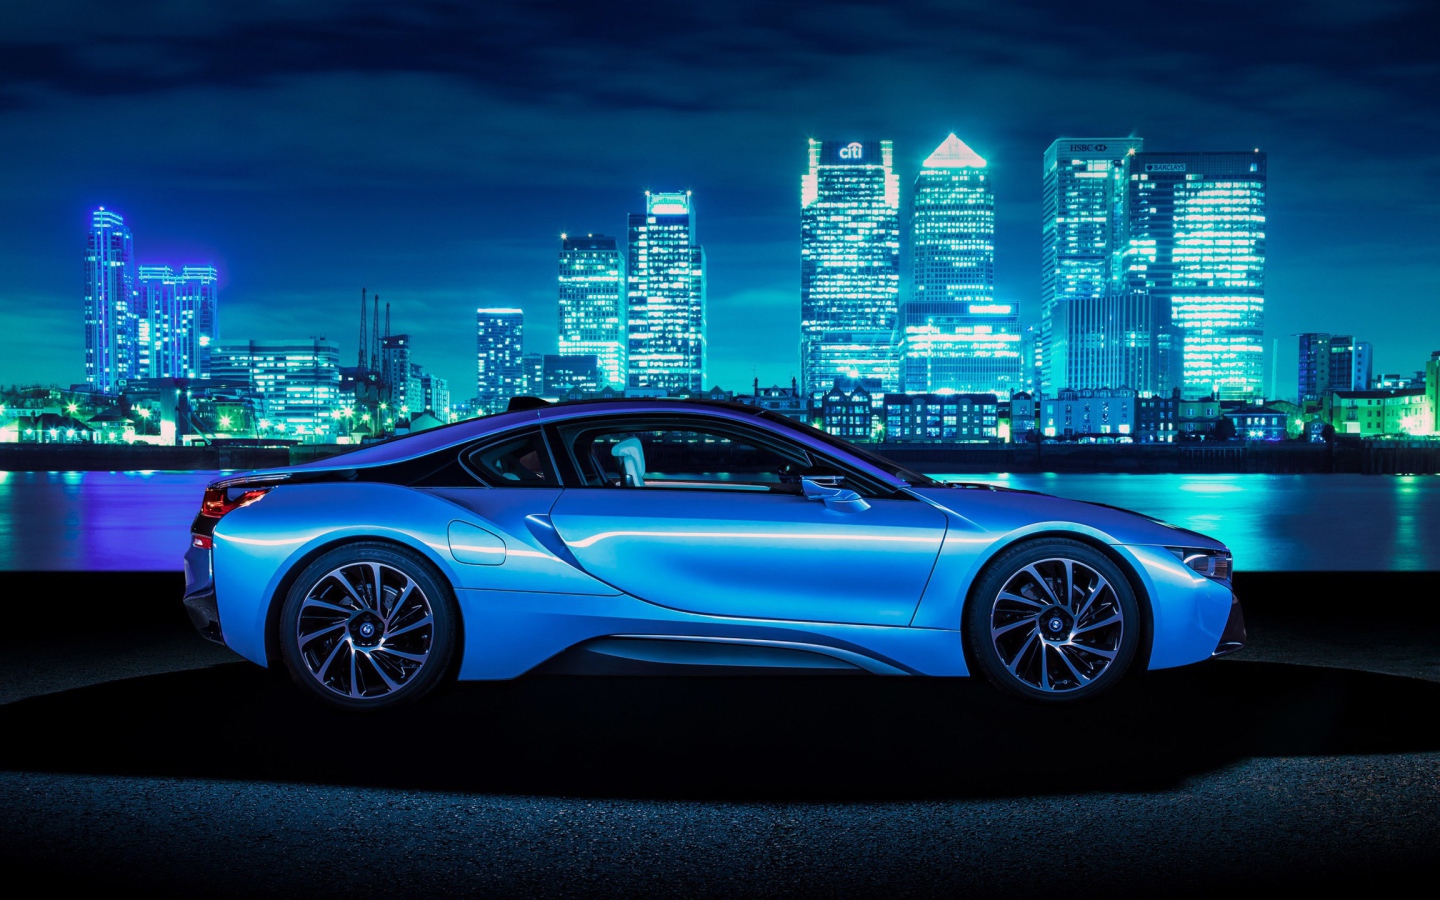 Синий люкс автомобиль BMW на фоне города